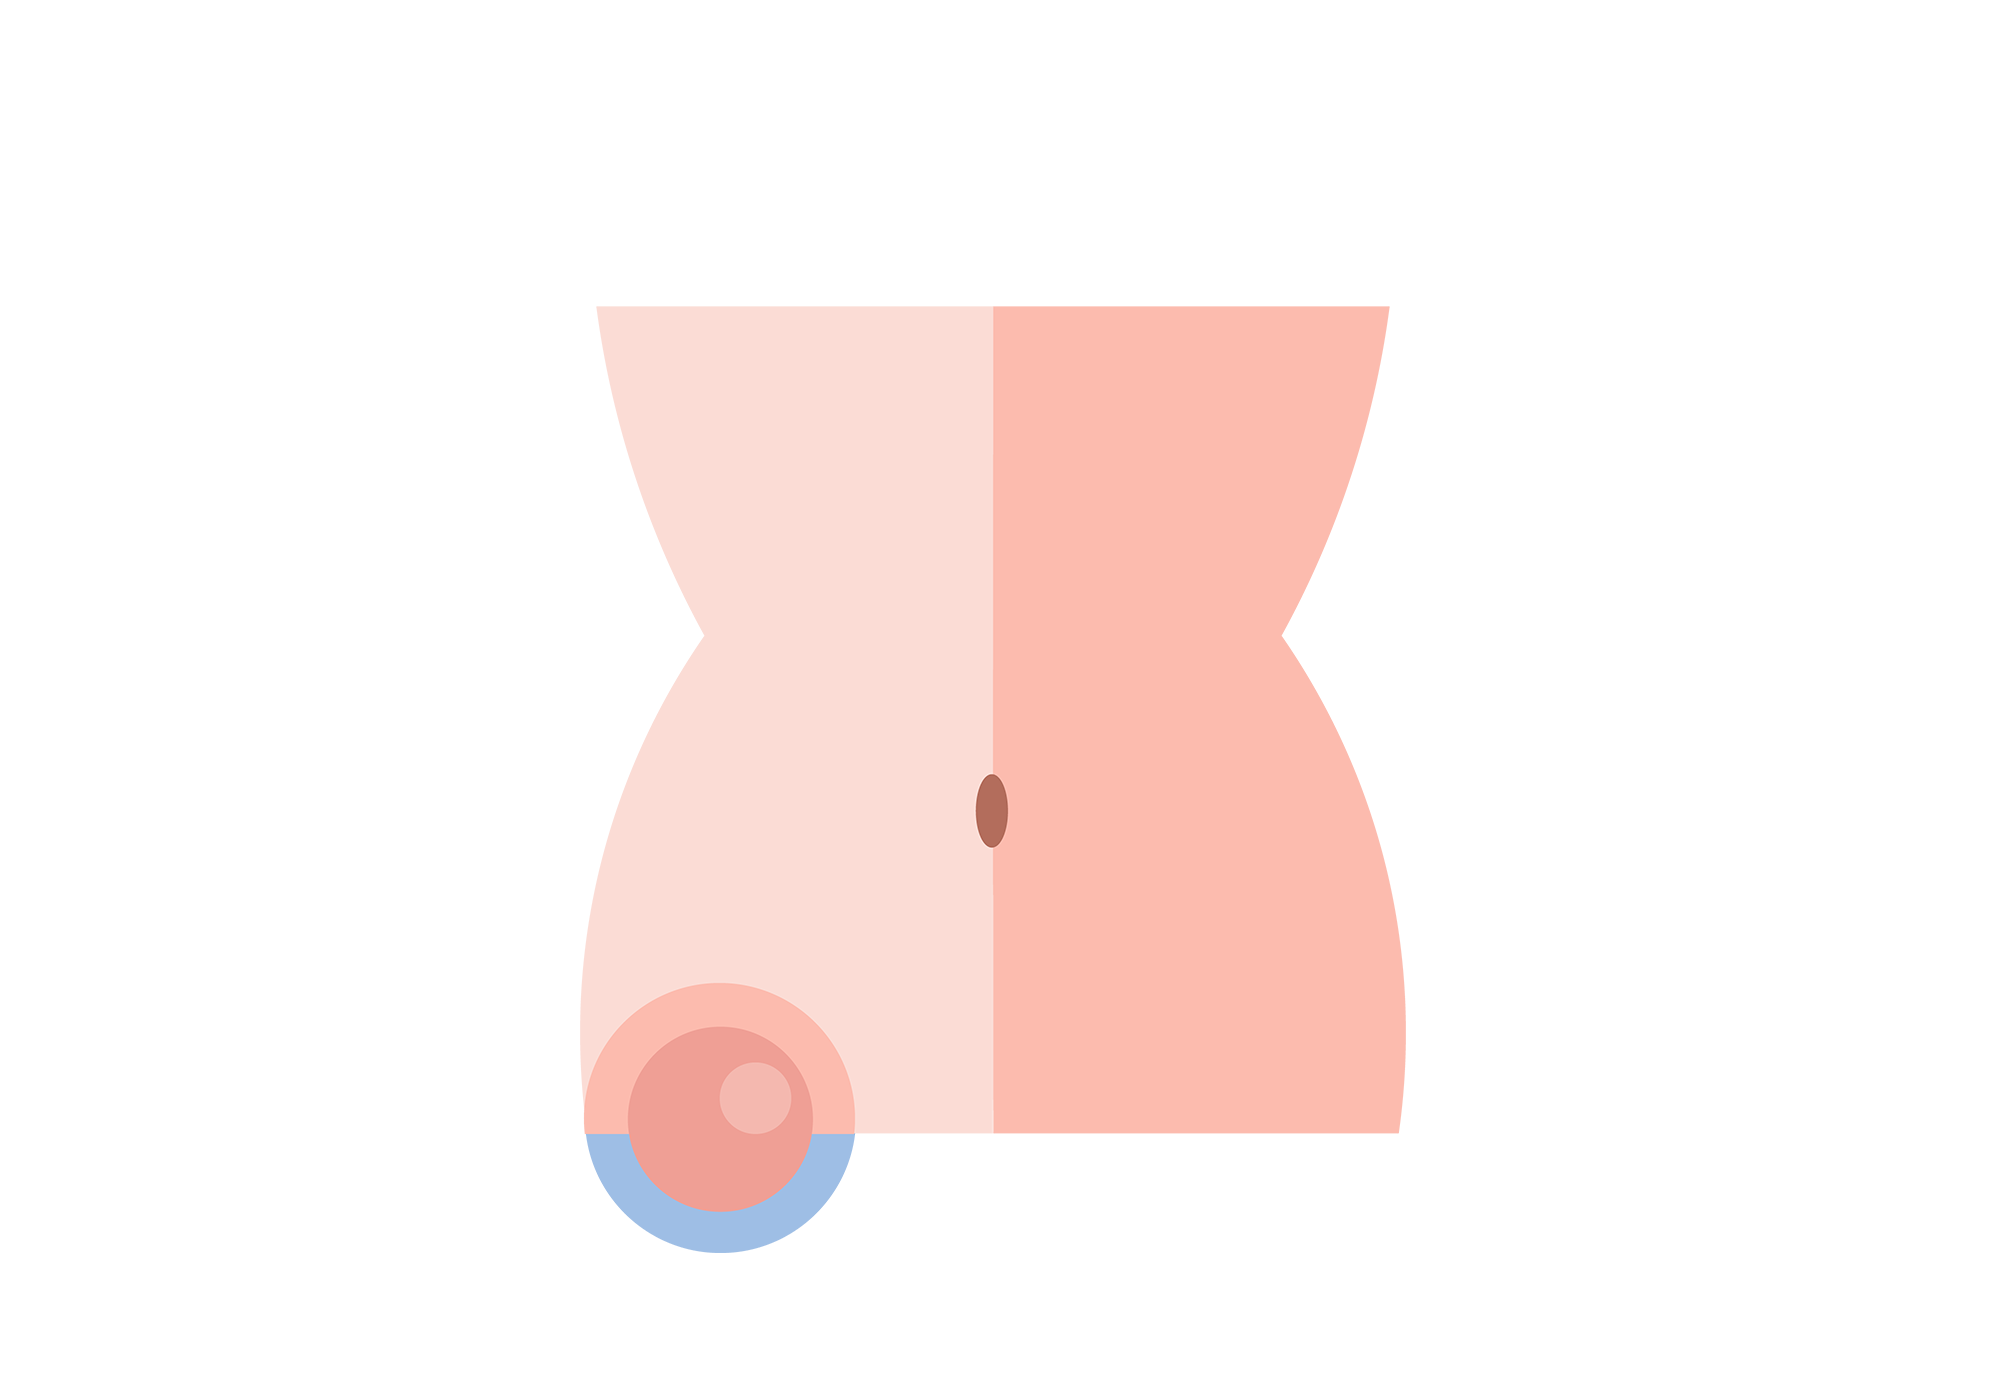 lower left abdominal pain in men